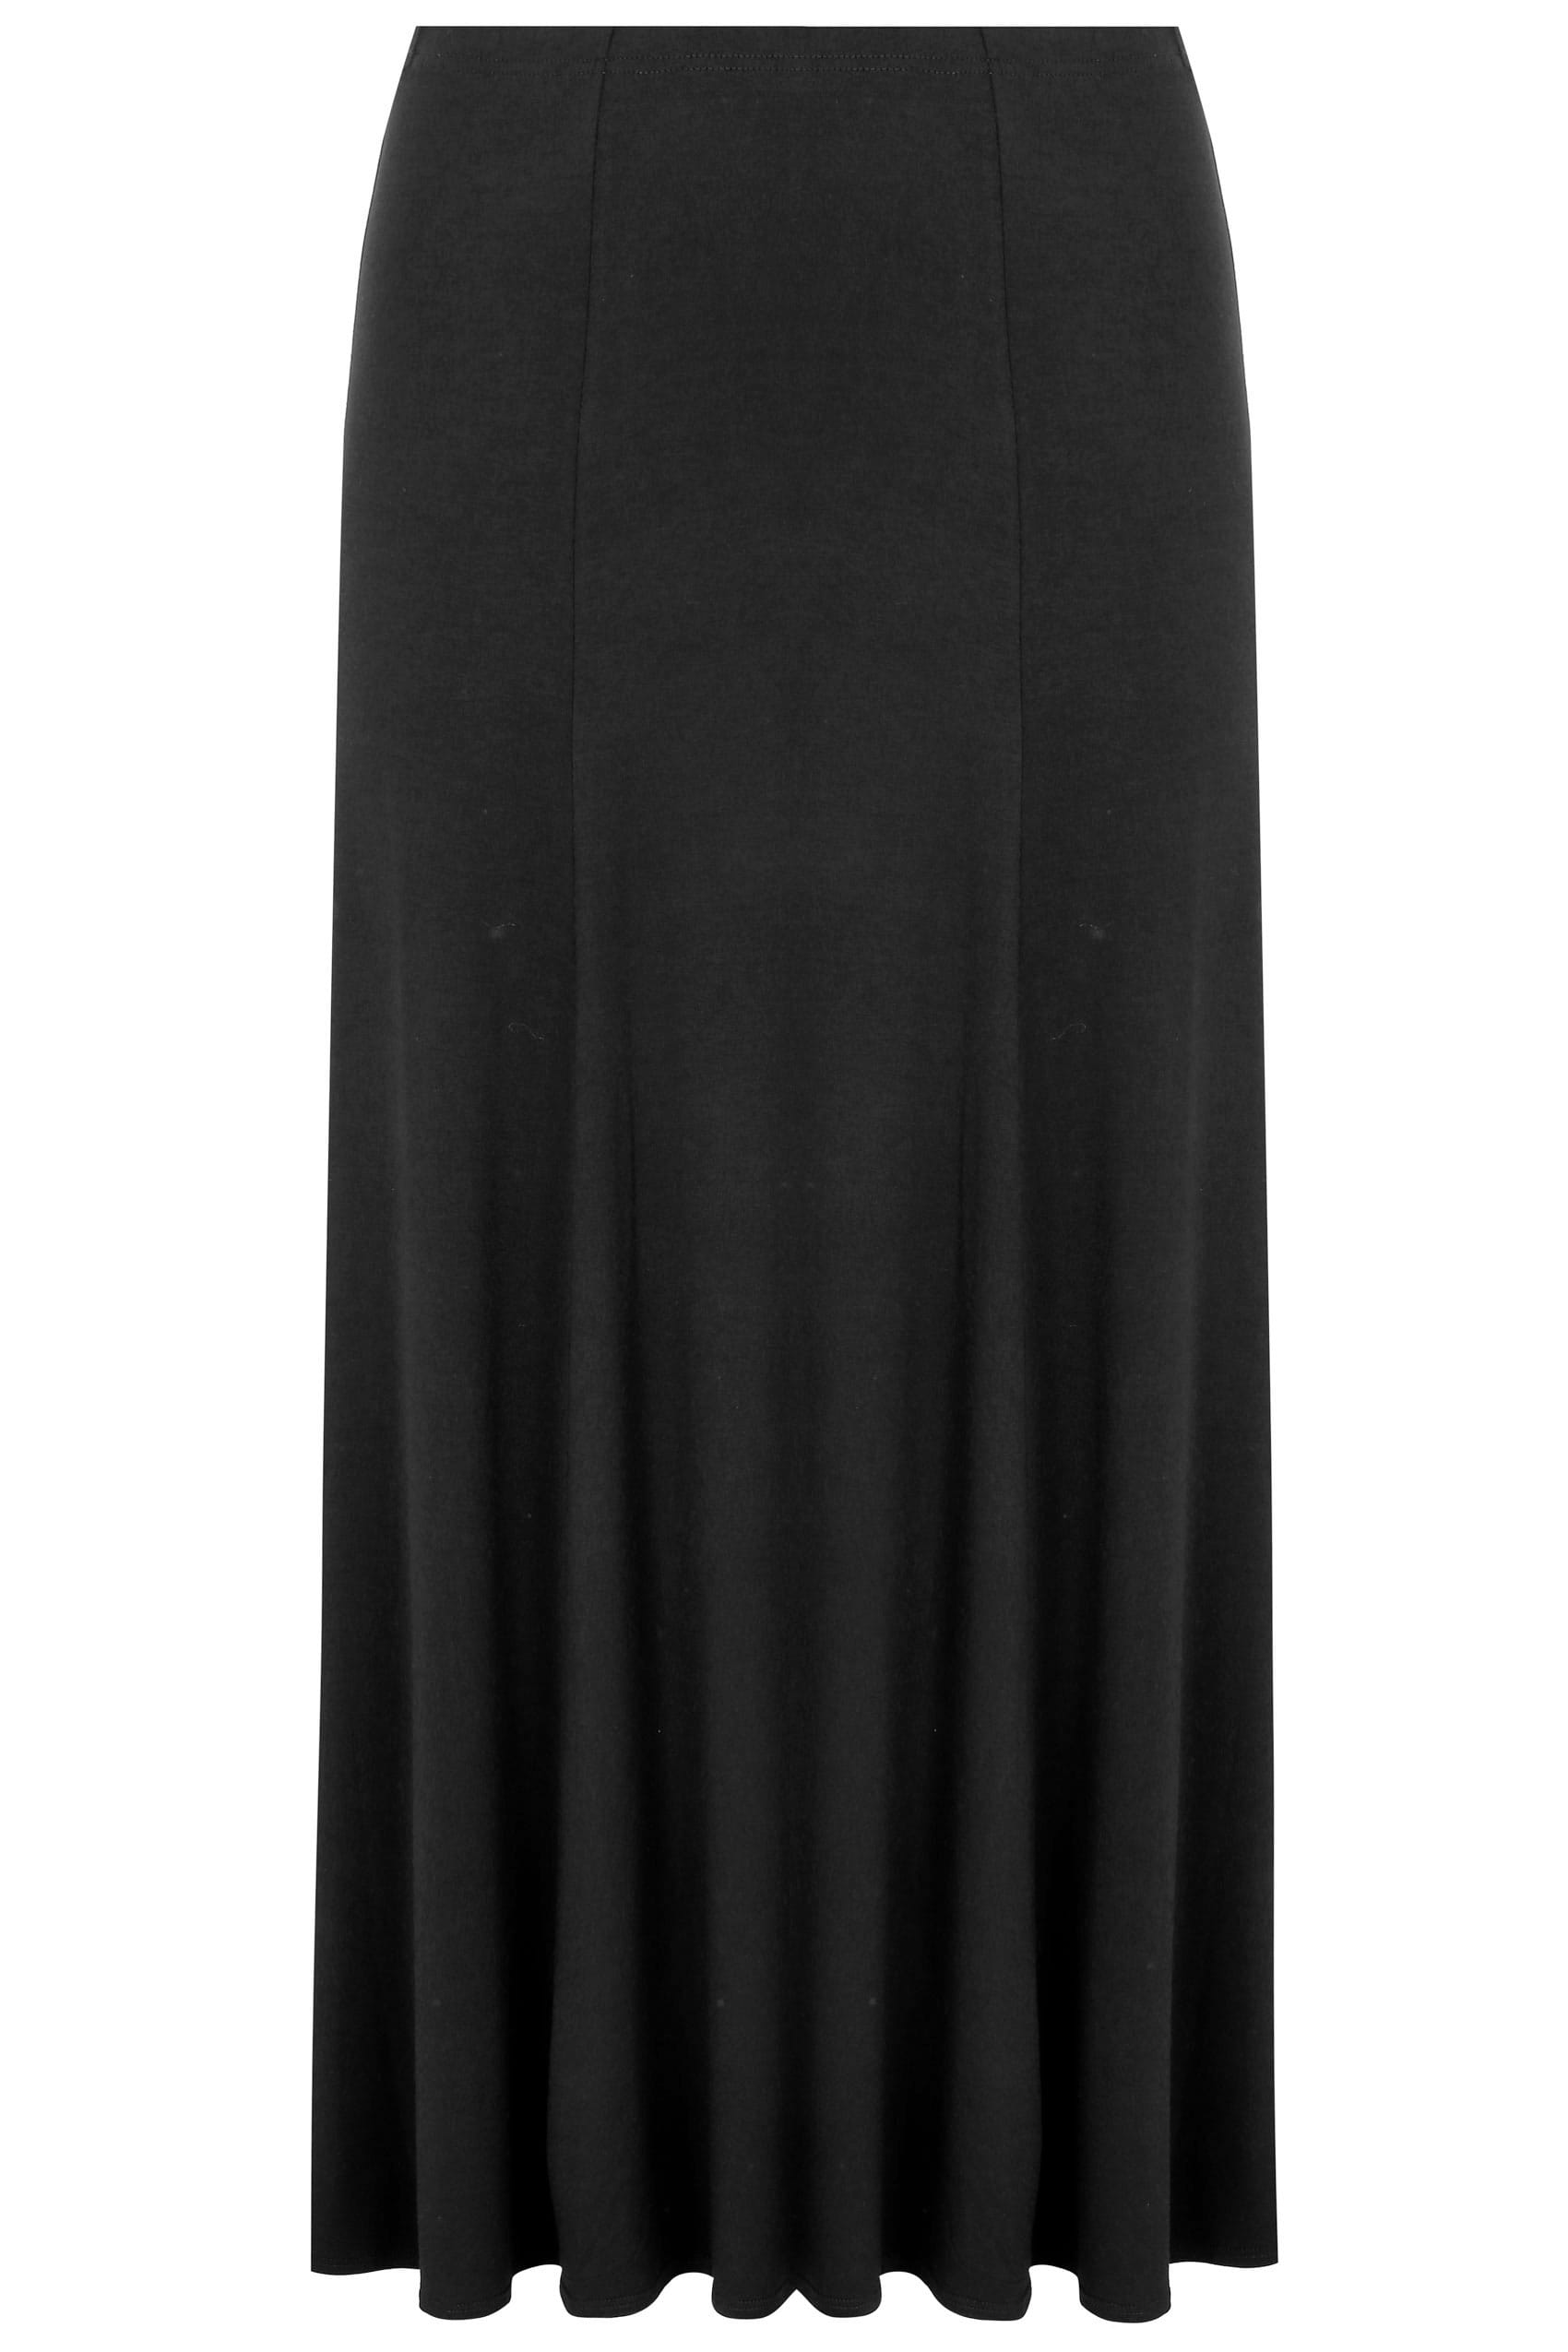 Black Jersey Maxi Skirt, Plus size 16 to 36